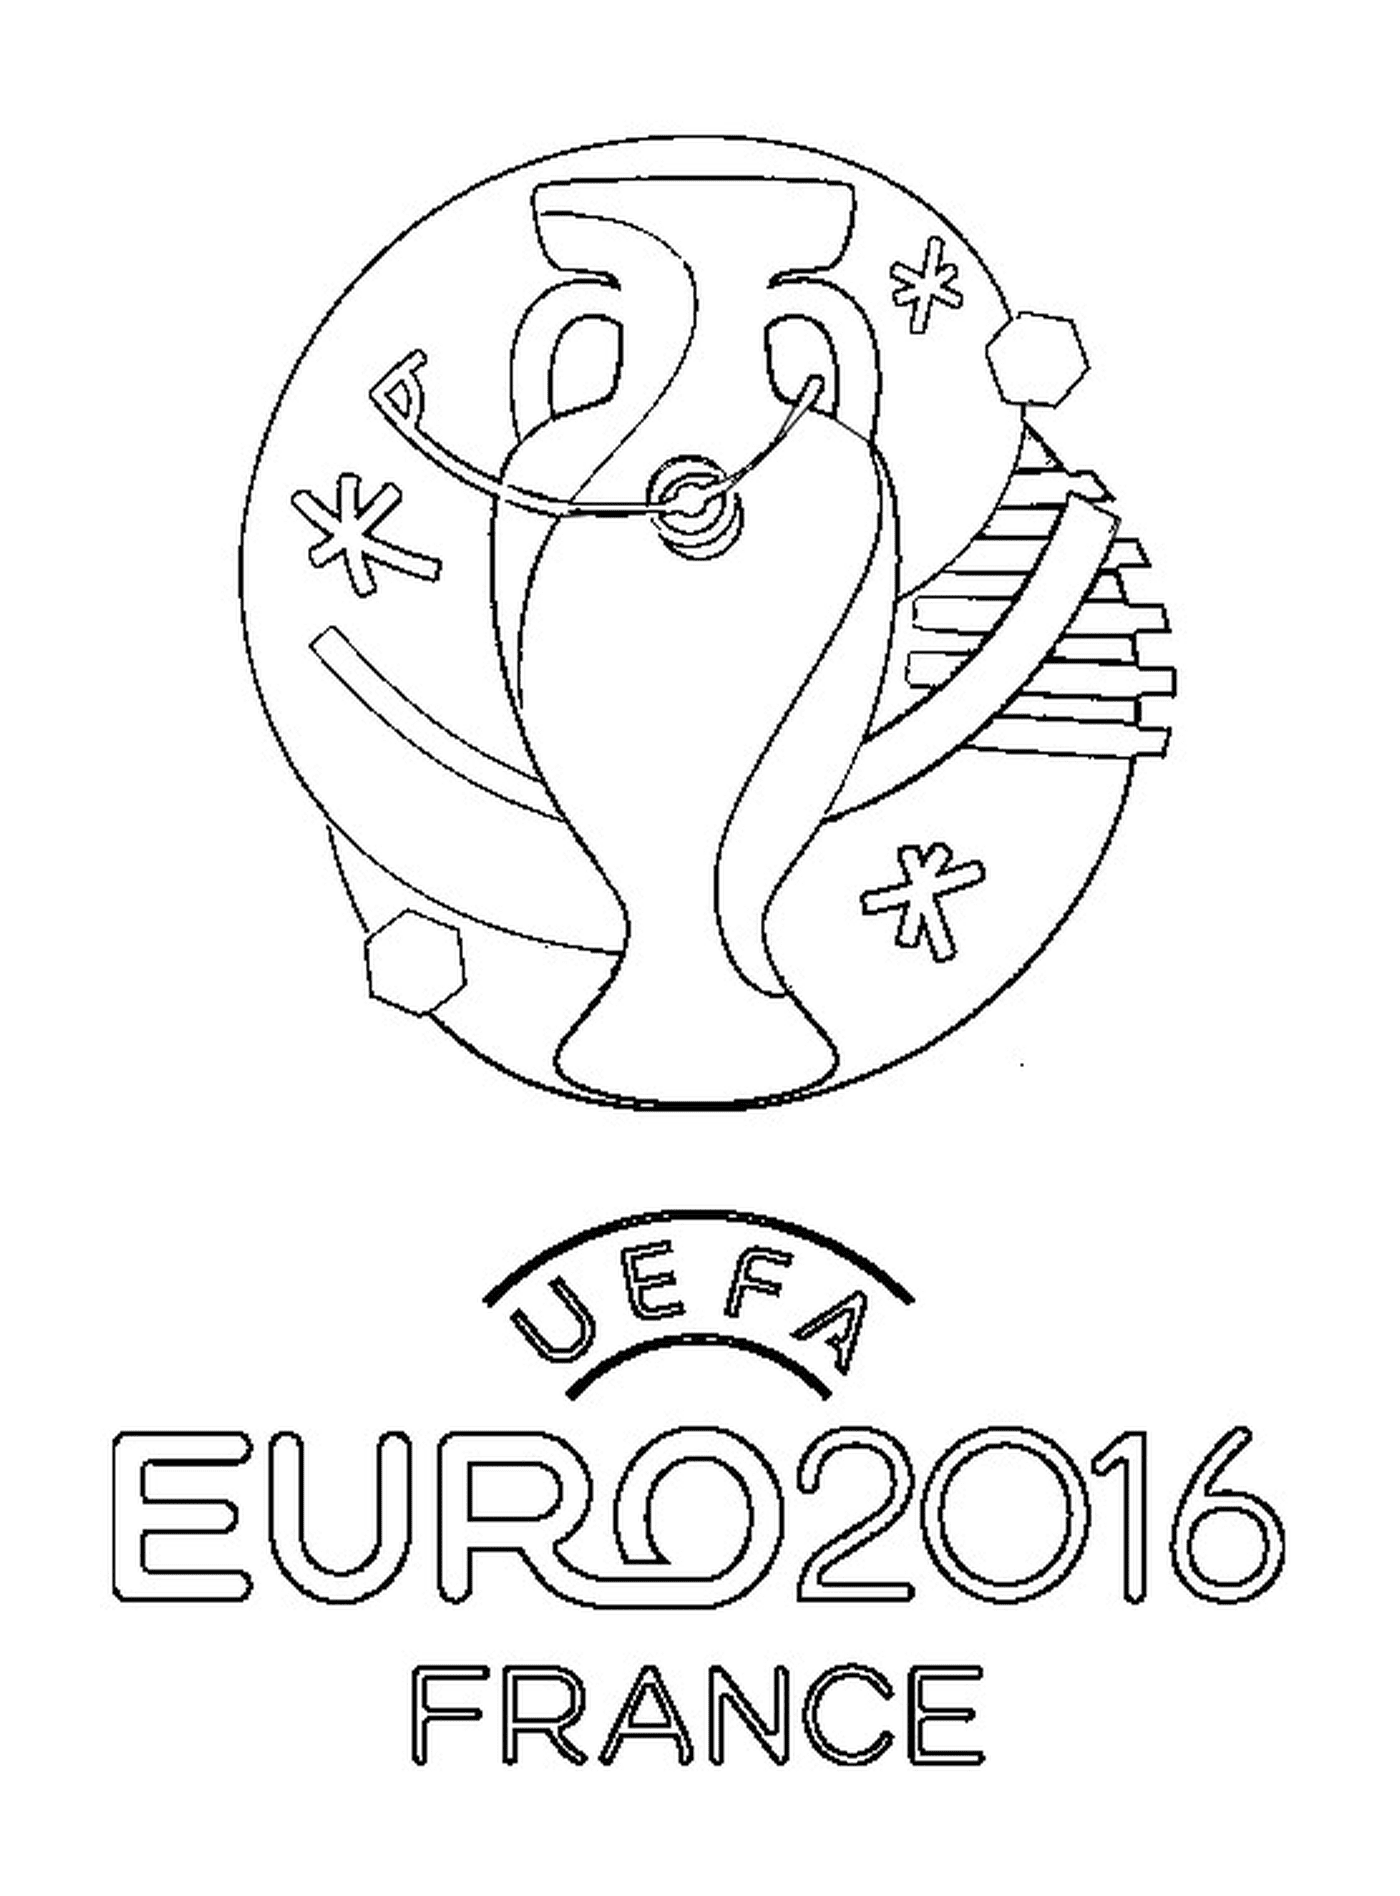  Euro 2016 logo in France 